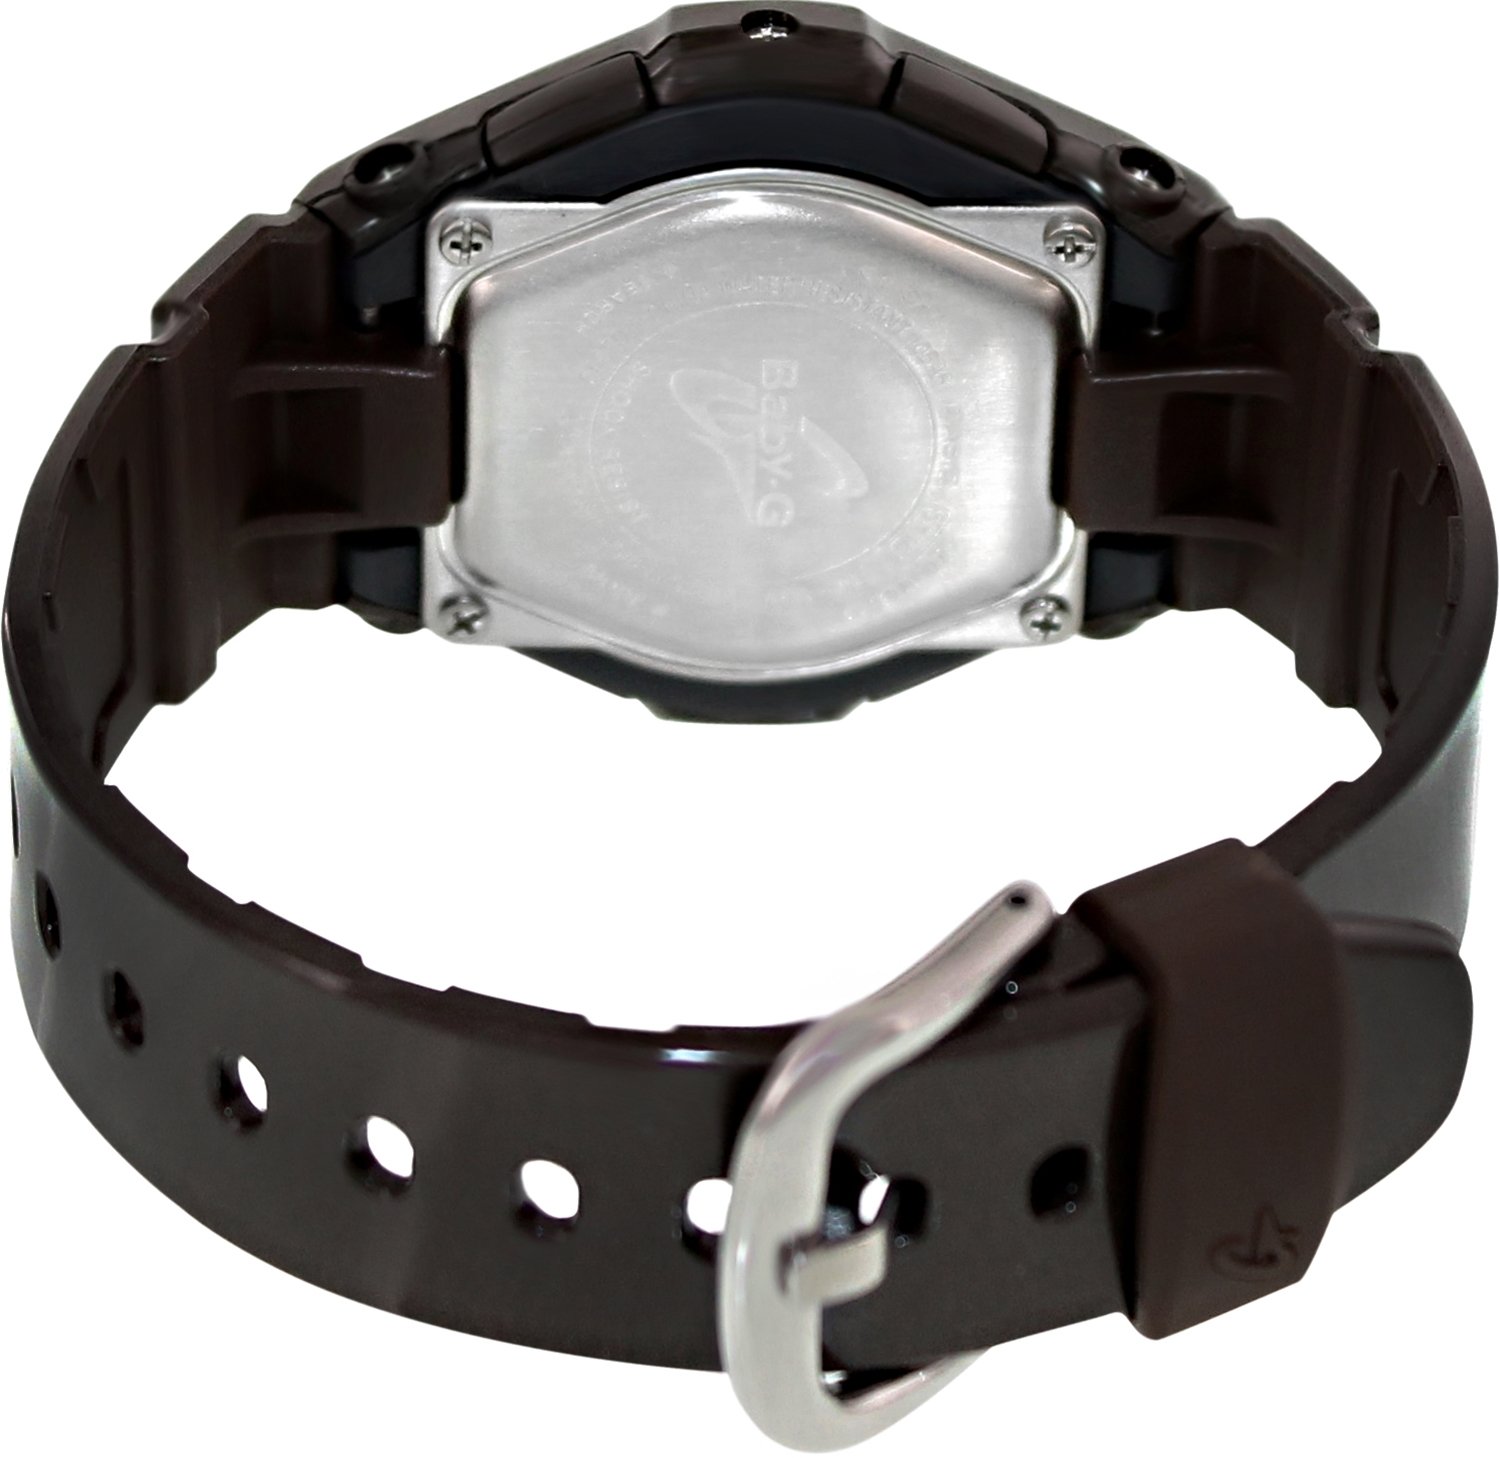 Casio Women's BGA141-5B Black Resin Quartz Watch with Black Dial